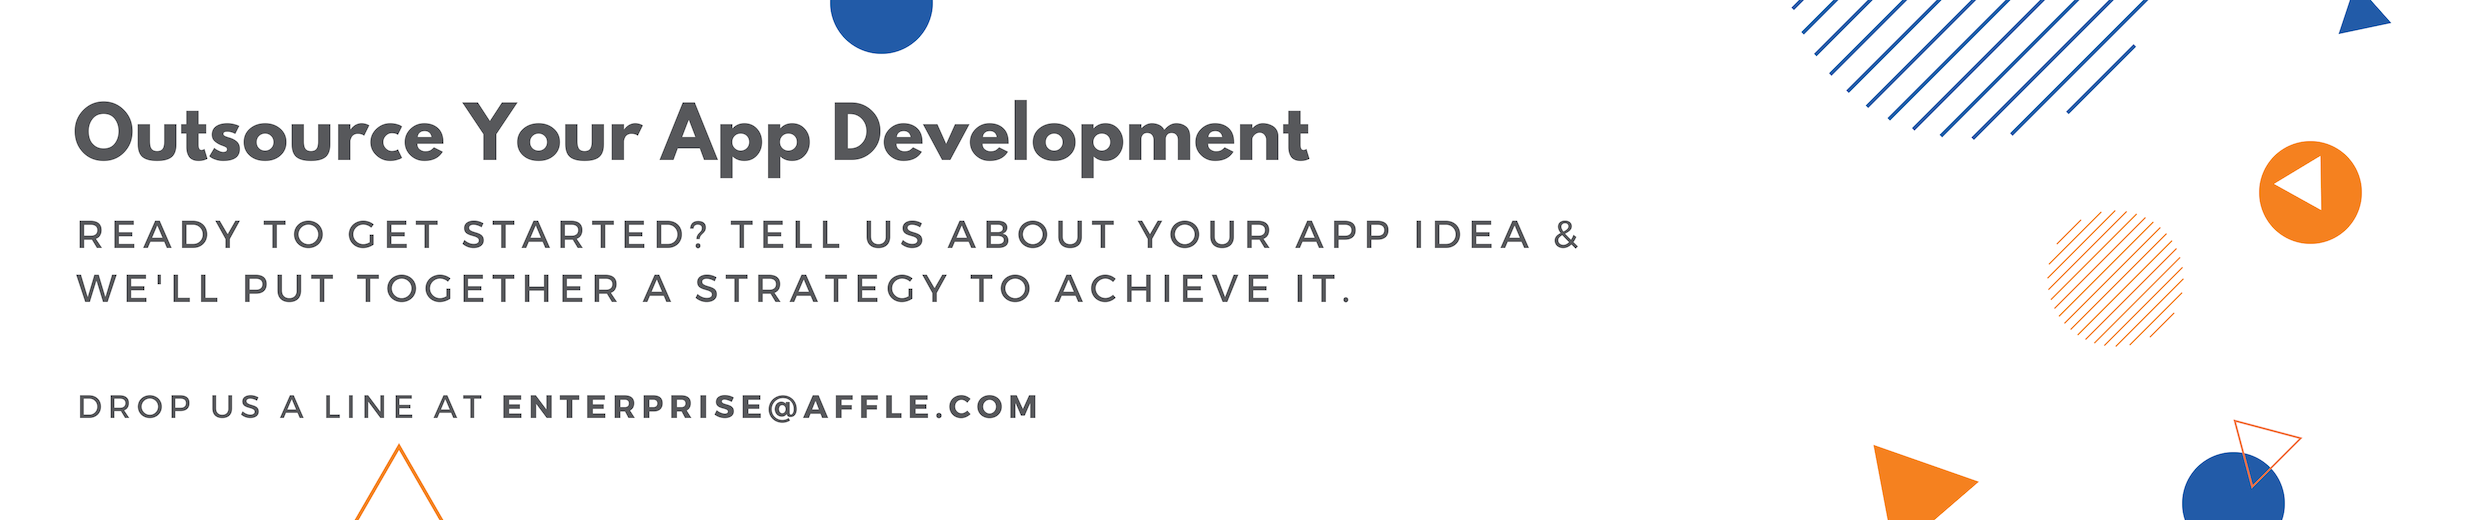 Outsource your app development